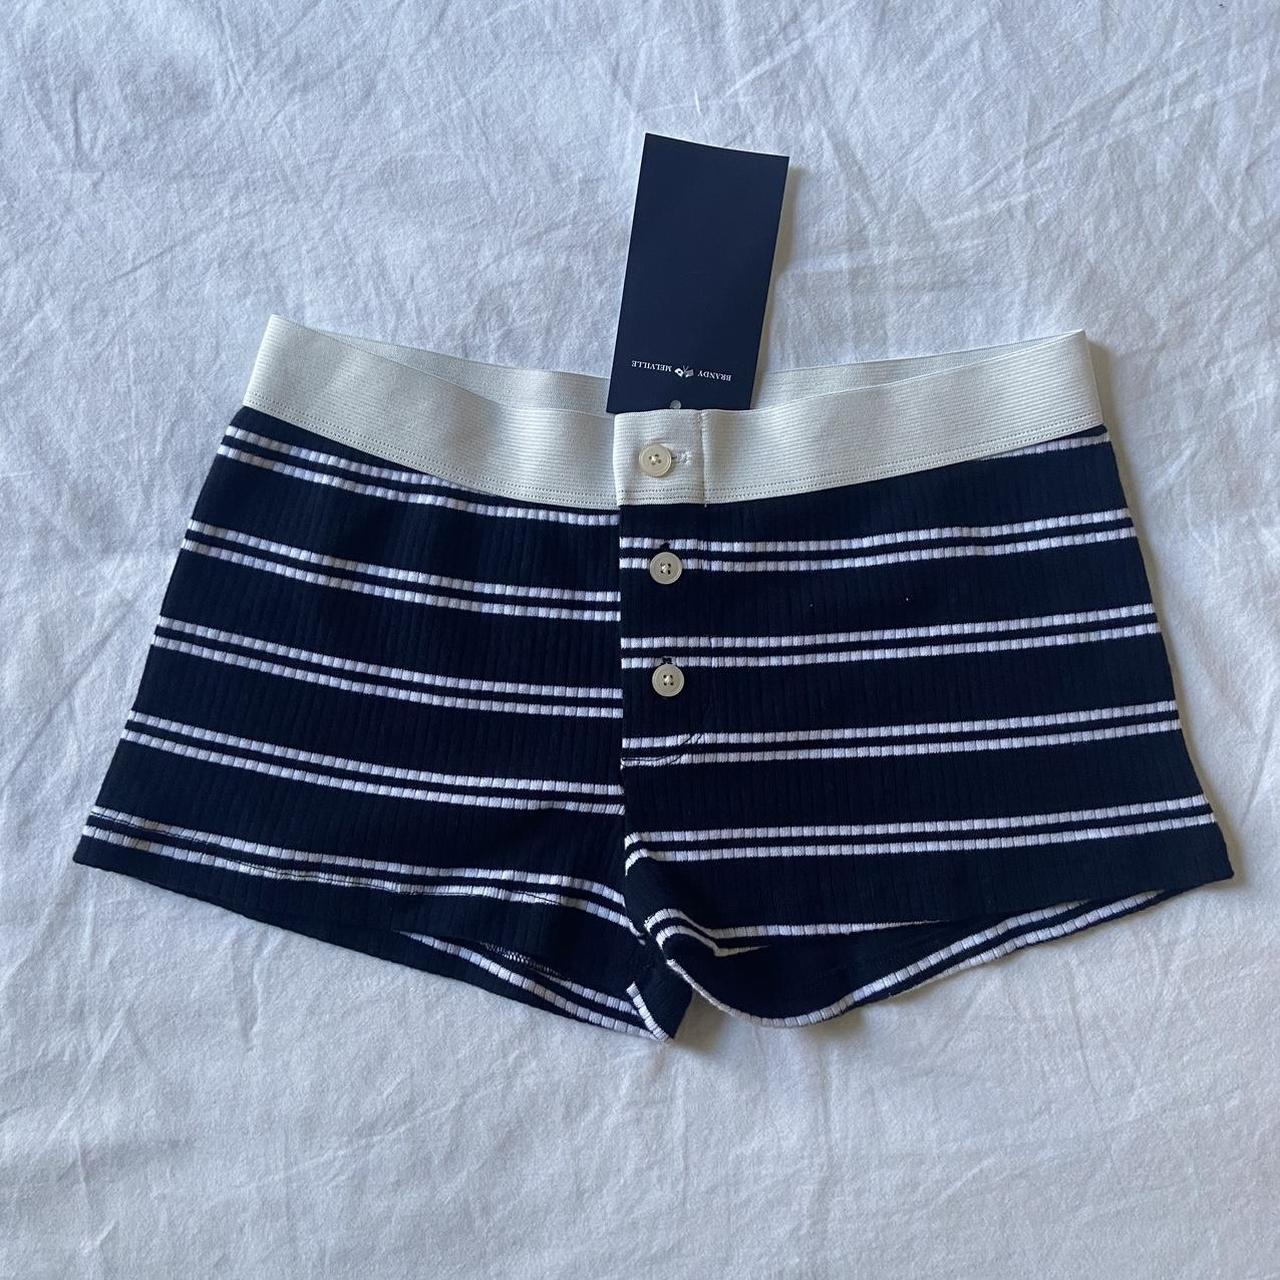 Brandy Melville Women's Navy and White Shorts | Depop